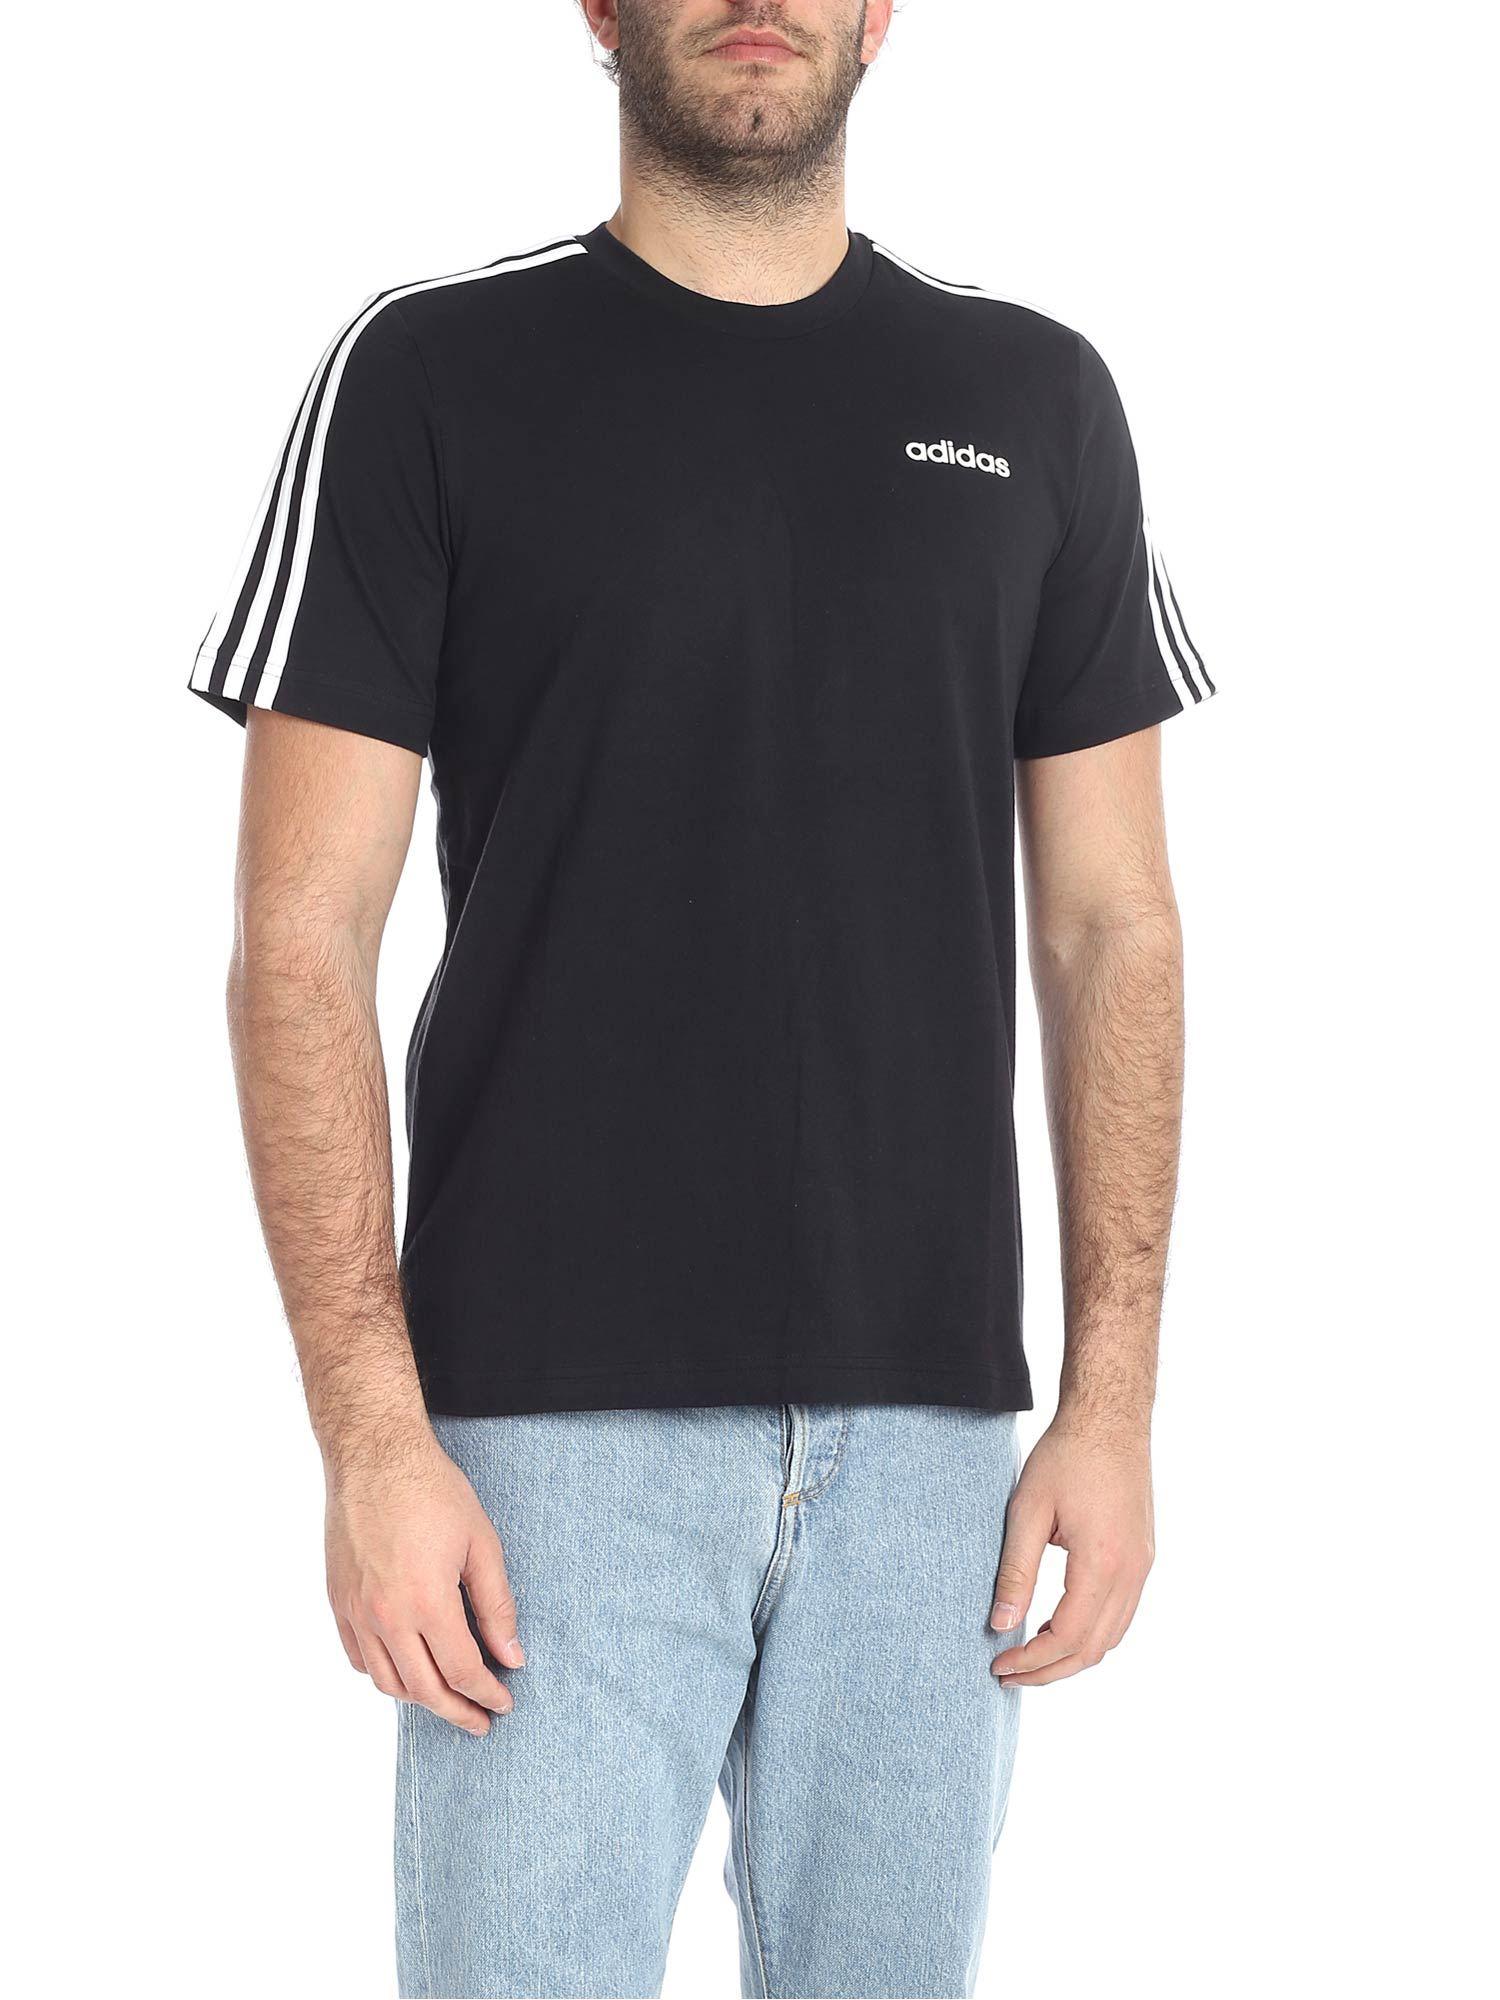 adidas Essentials 3-stripes Black T-shirt in Black for Men - Lyst